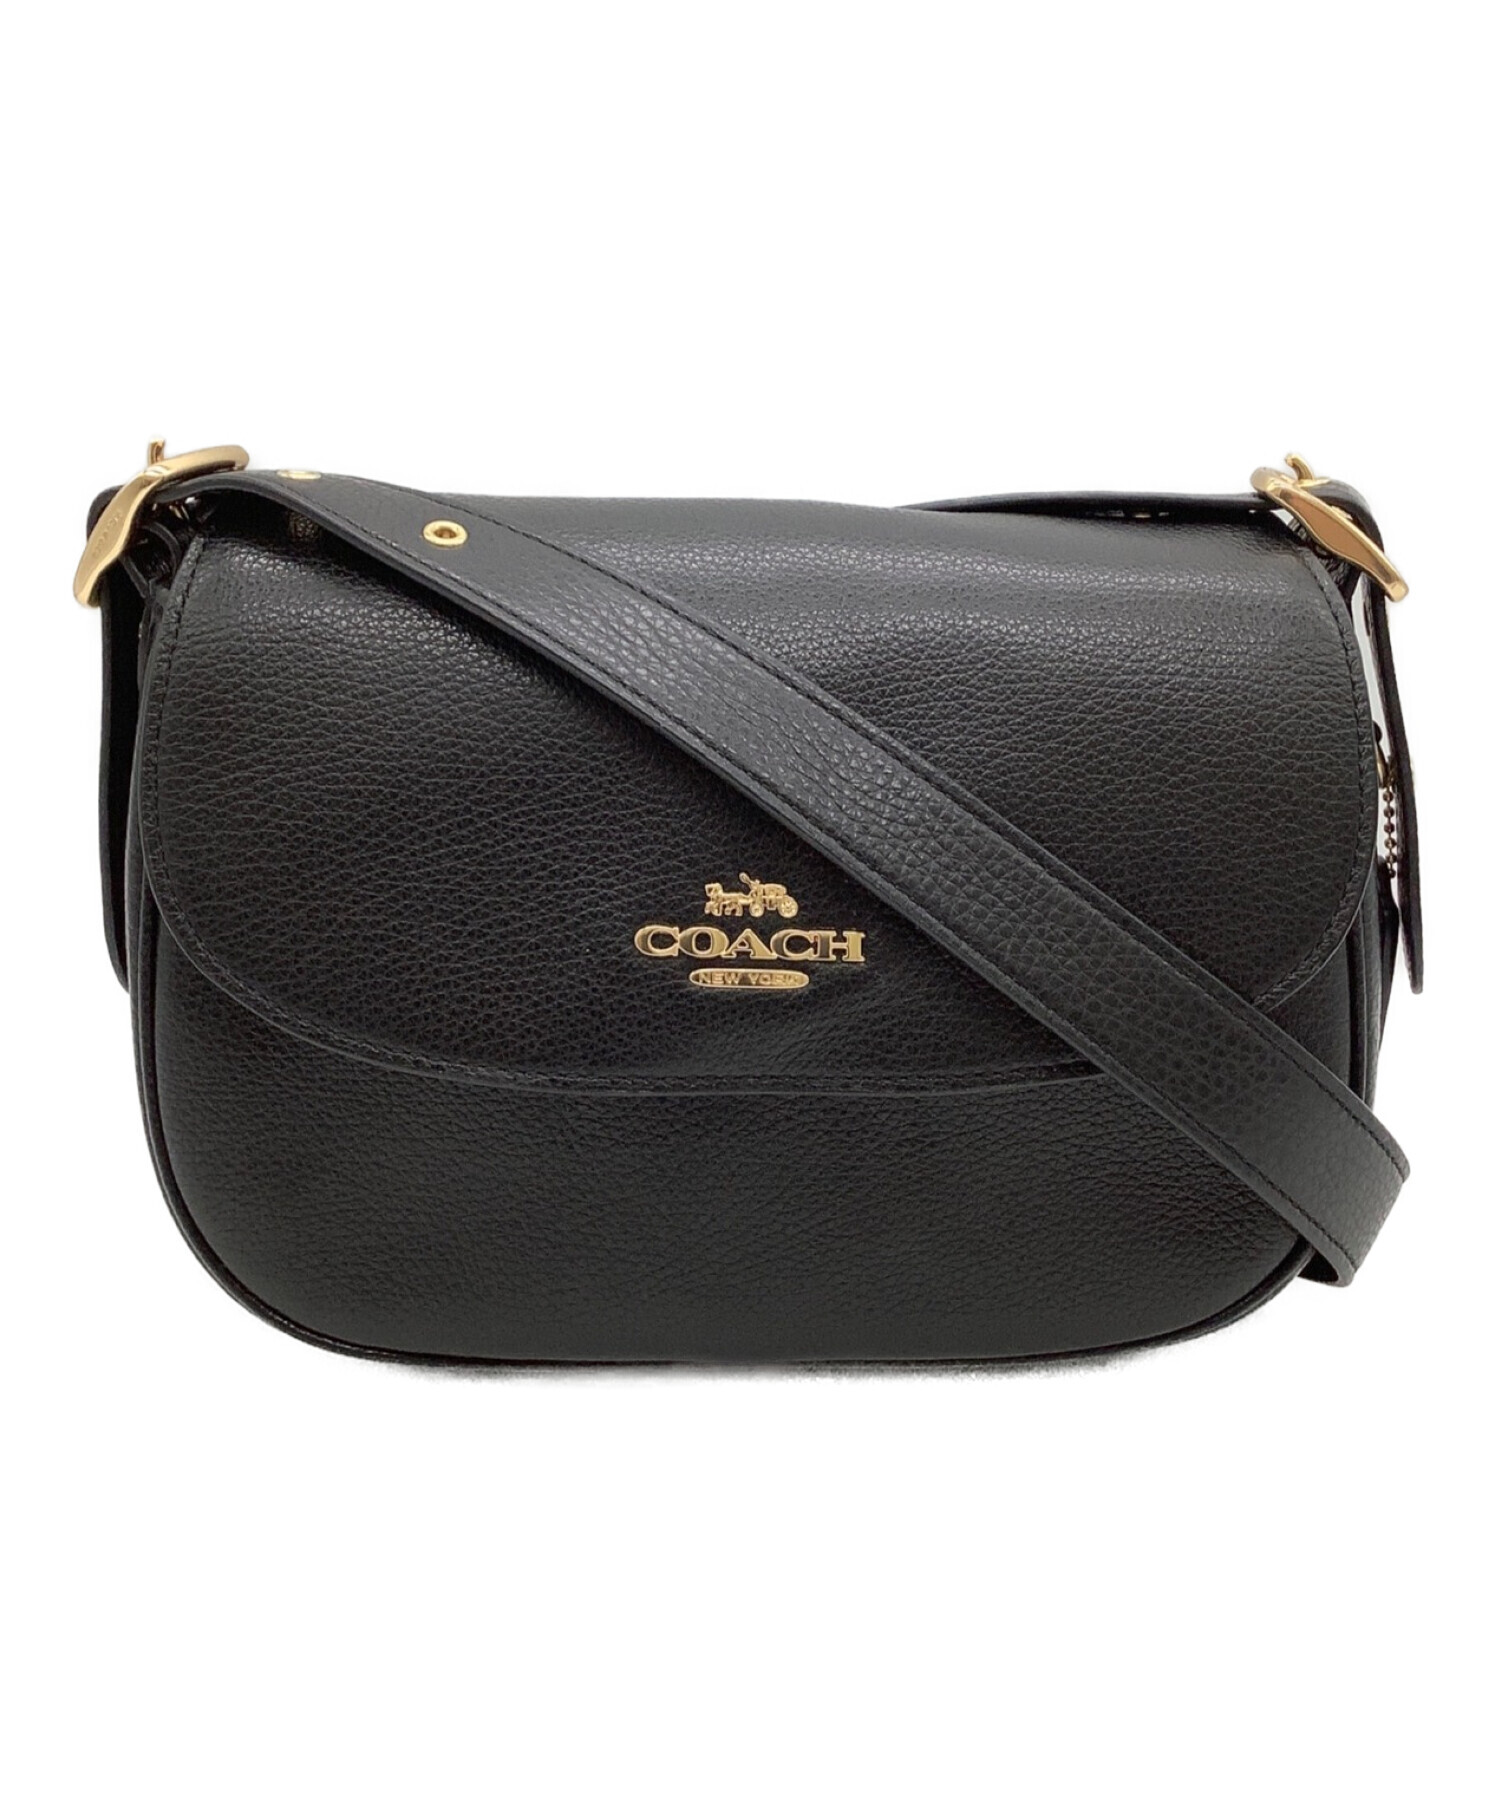 Coach Macie Saddle Bag, Black: Handbags